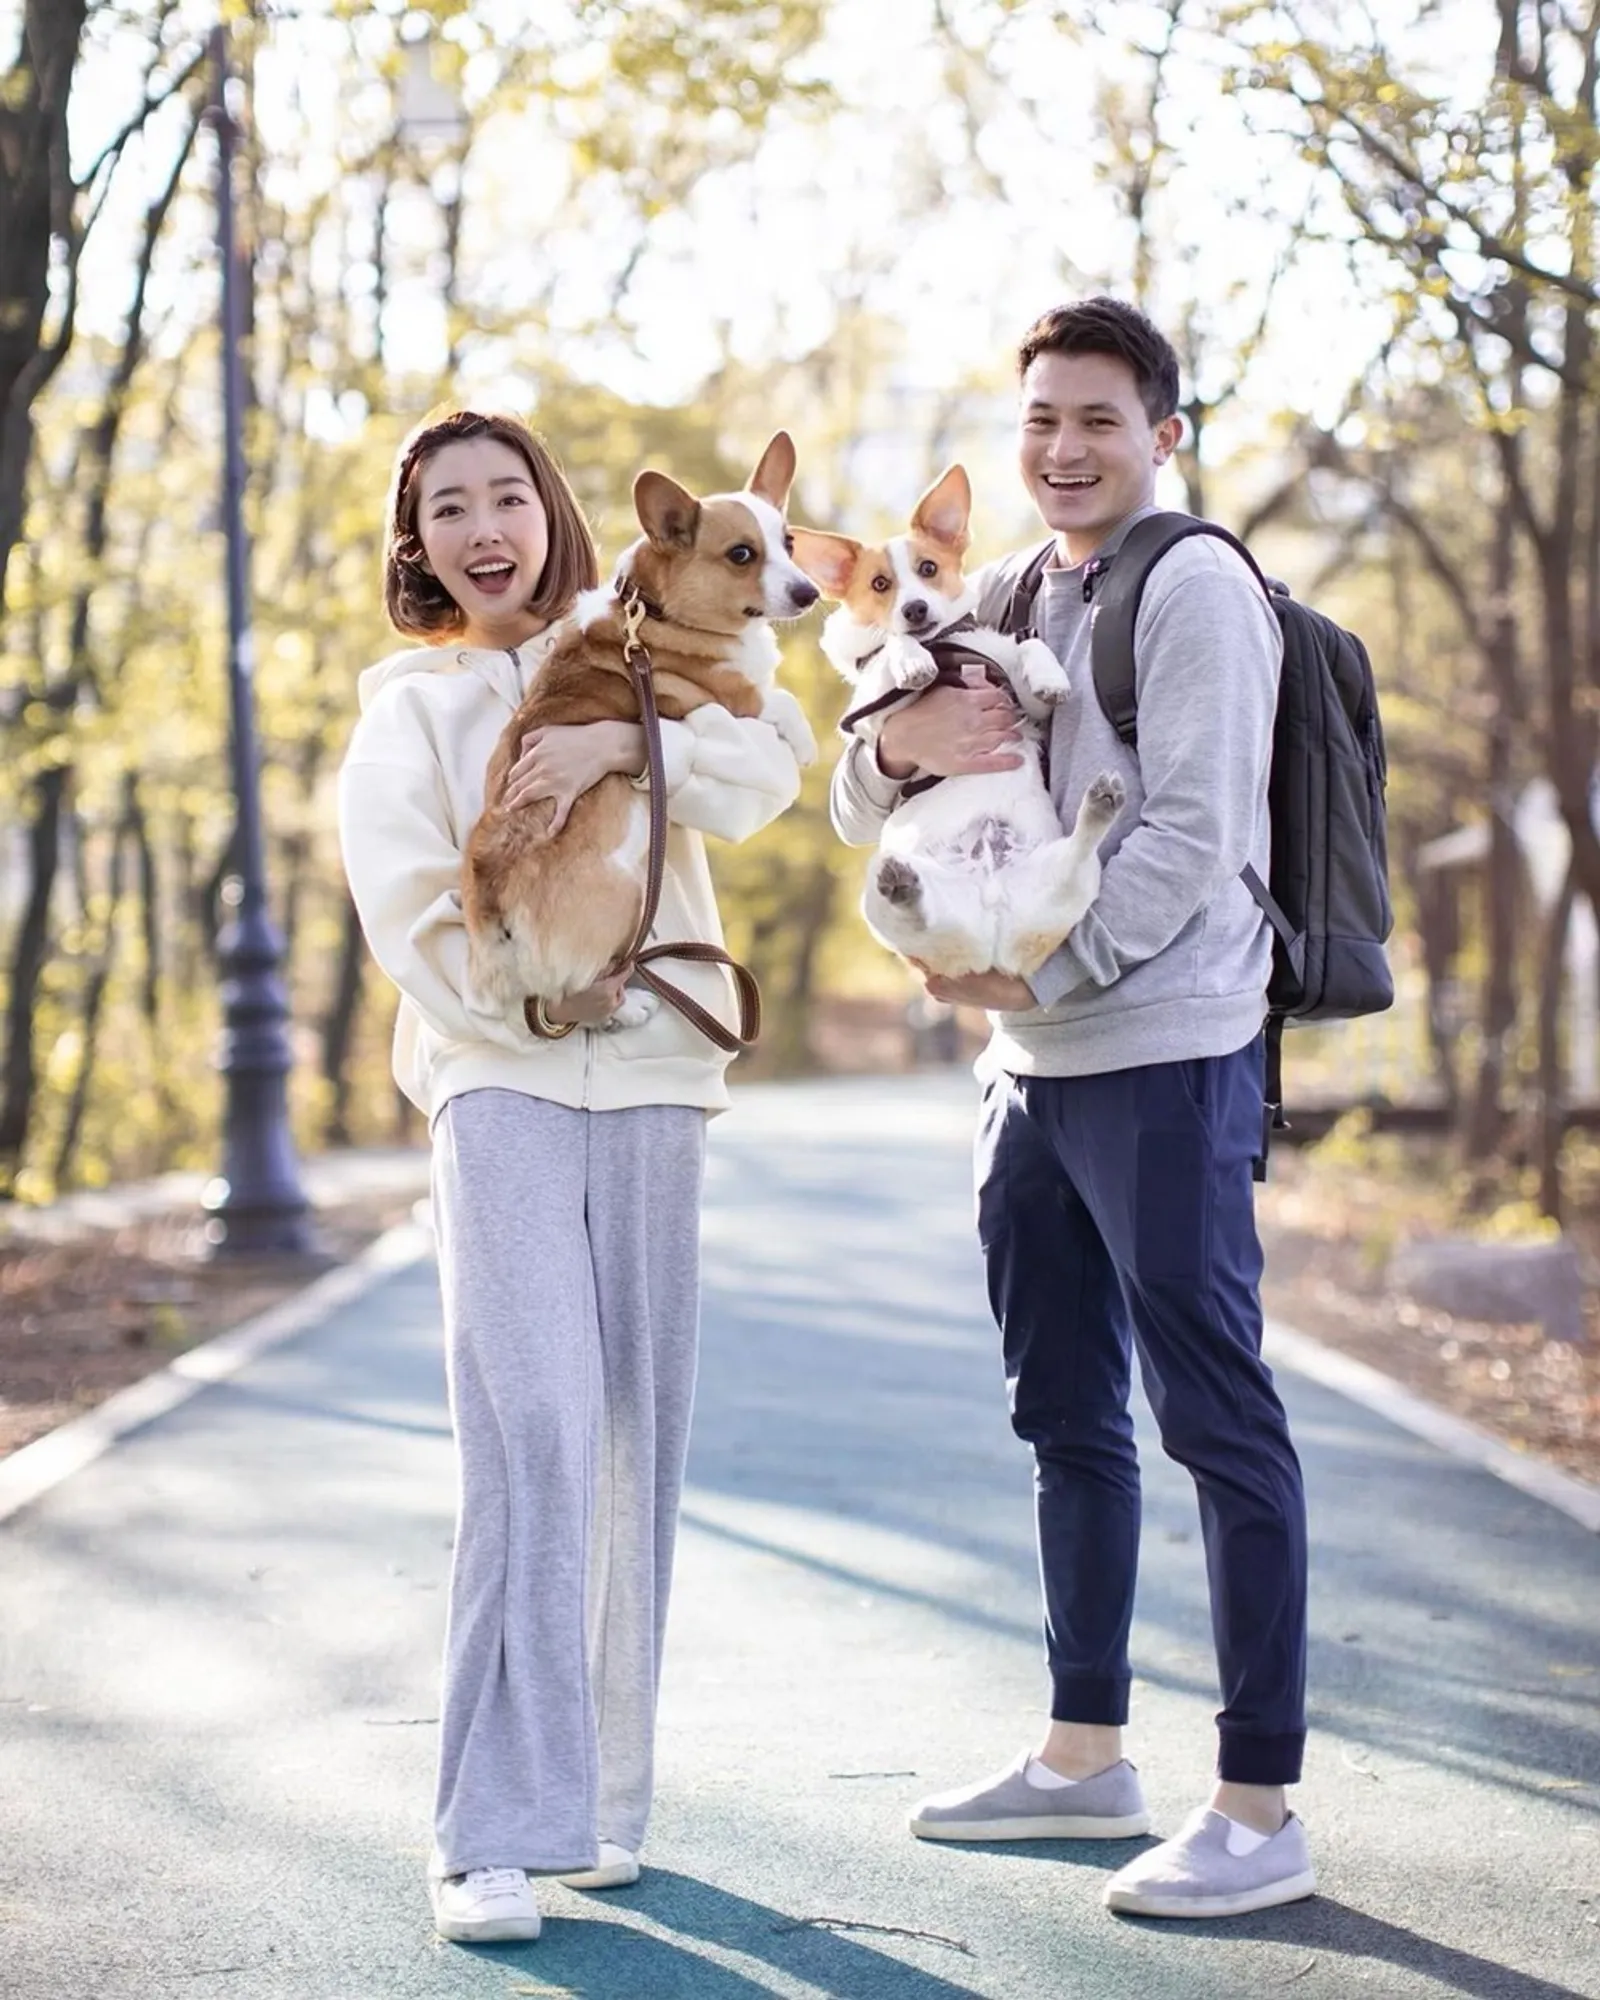 Terlibat Kontroversi, Ini 9 Potret Mesra YouTuber Sunny Dahye & Suami